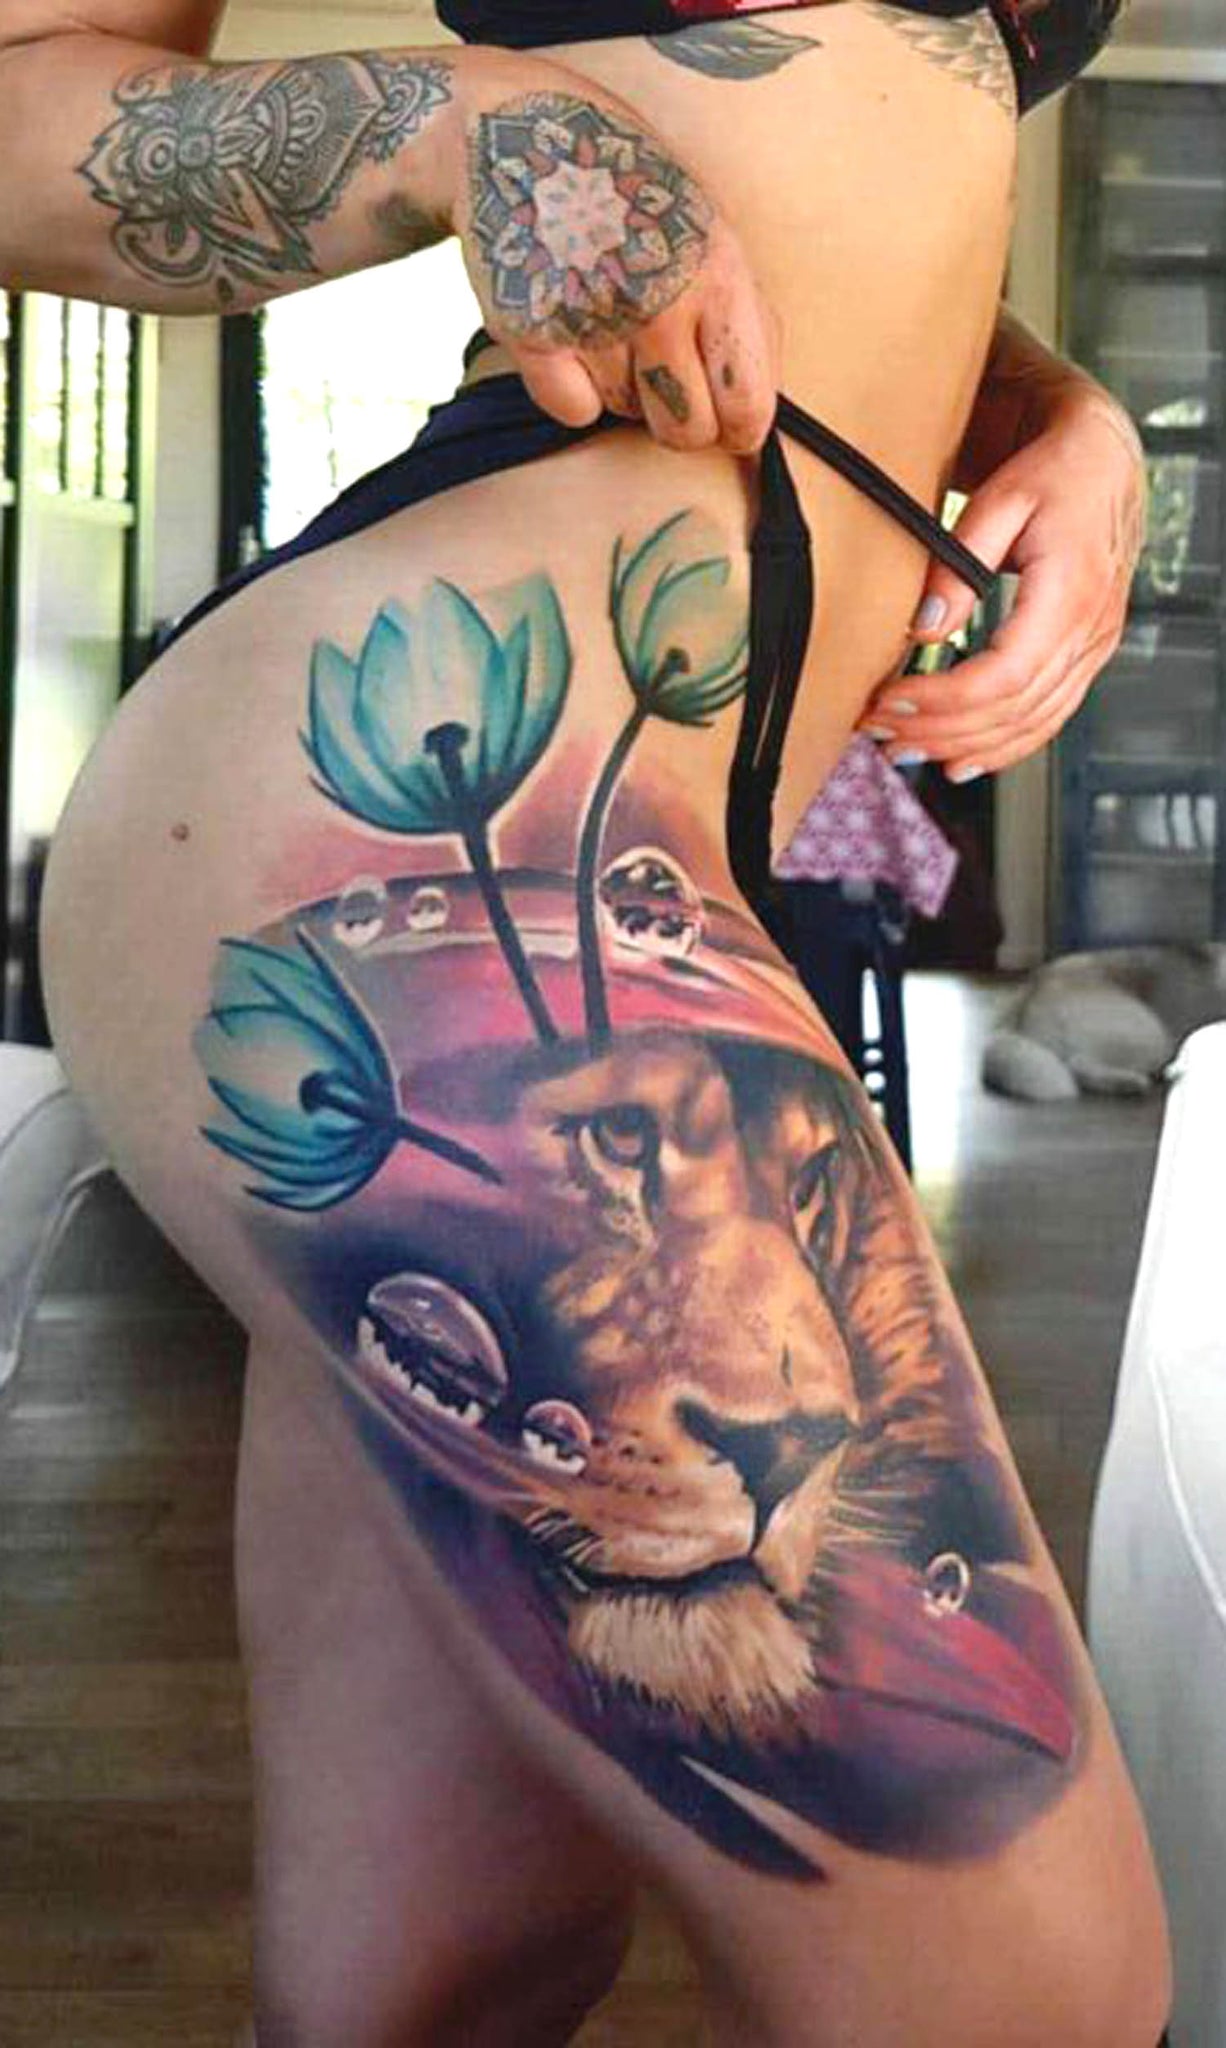 Creative Large Lion Hip Tattoo Ideas for Women - Women's Watercolor Water Lily Thigh Tat - ideas de tatuaje de león cadera - www.MyBodiArt.com